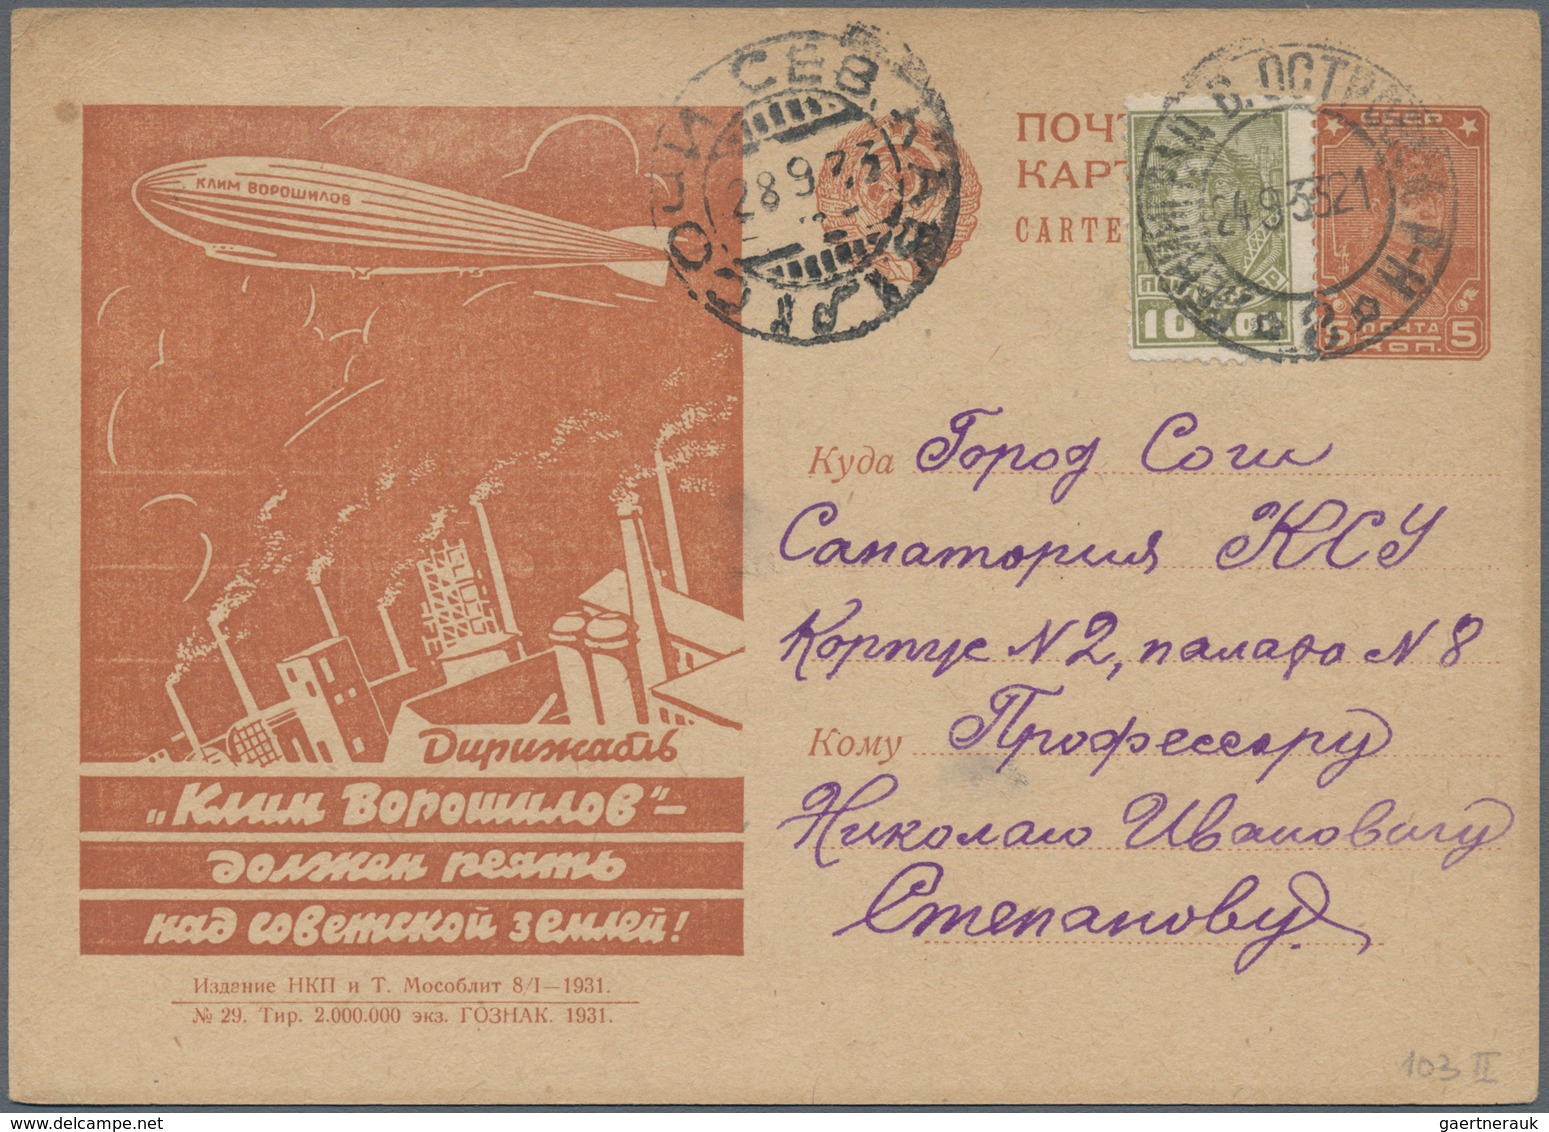 Sowjetunion - Ganzsachen: 1930/32, 7 Different Used Picture Postcards With Motive Zeppelin, One Card - Non Classés